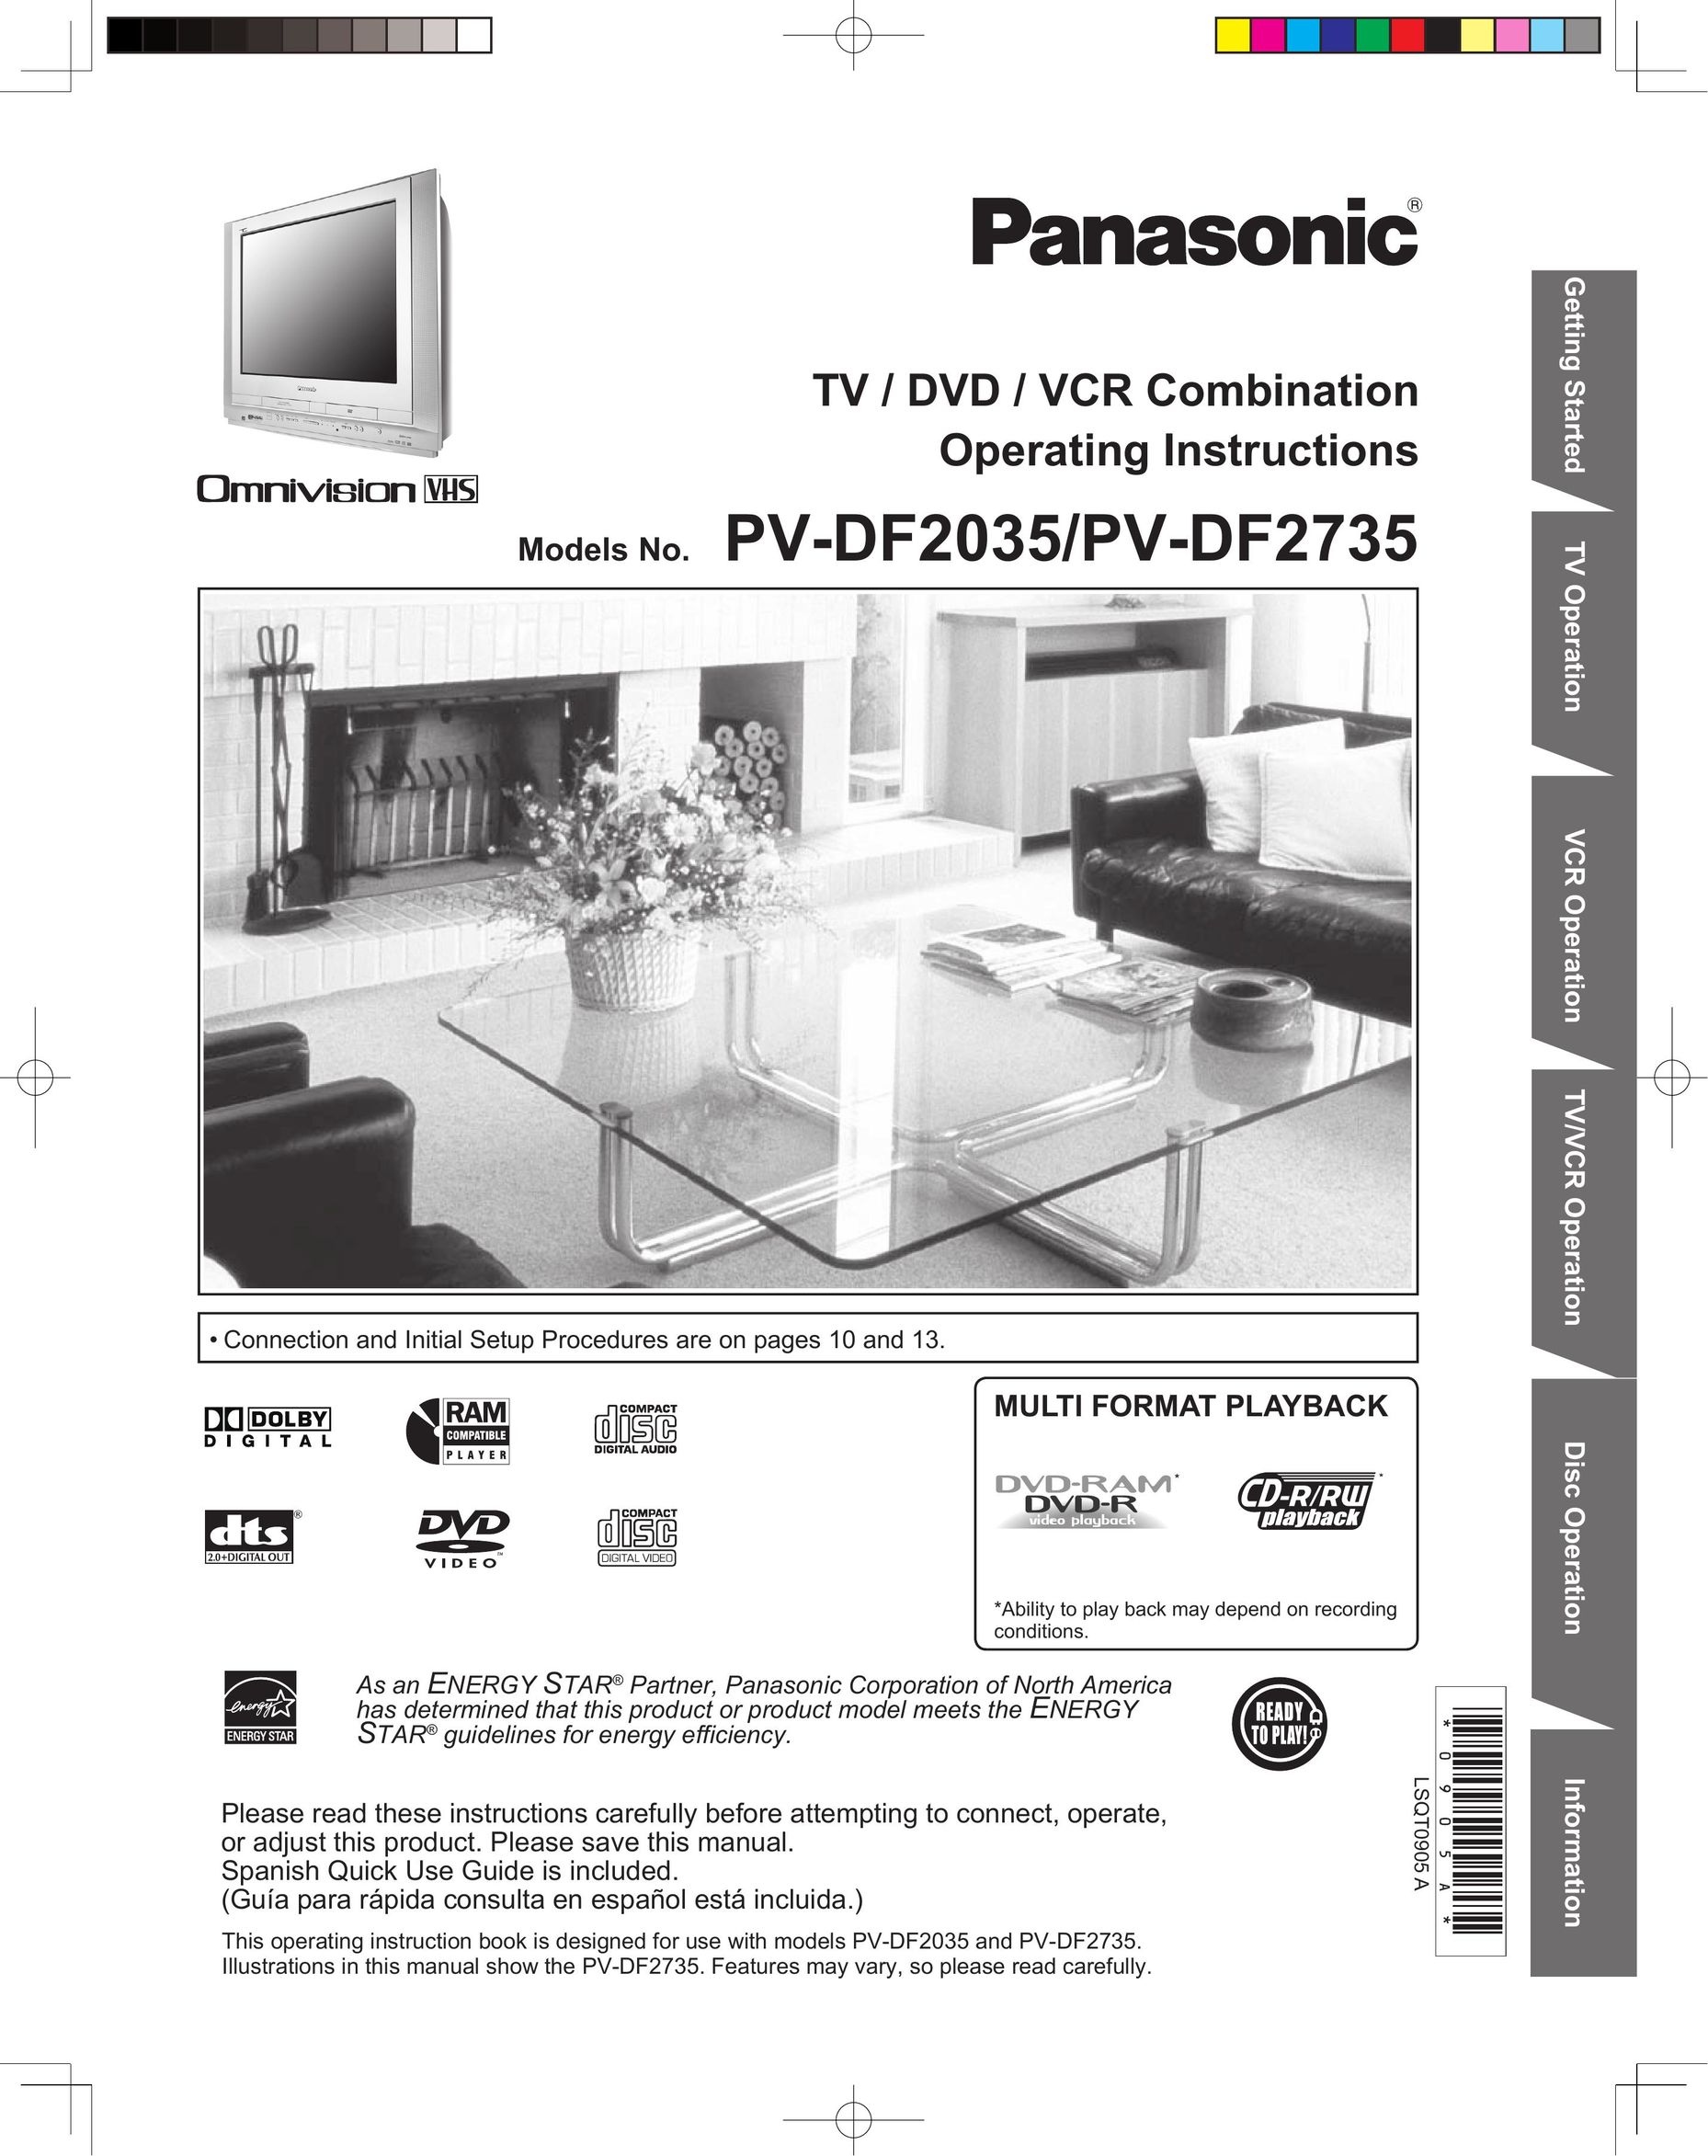 Panasonic PV-DF2035 TV DVD Combo User Manual